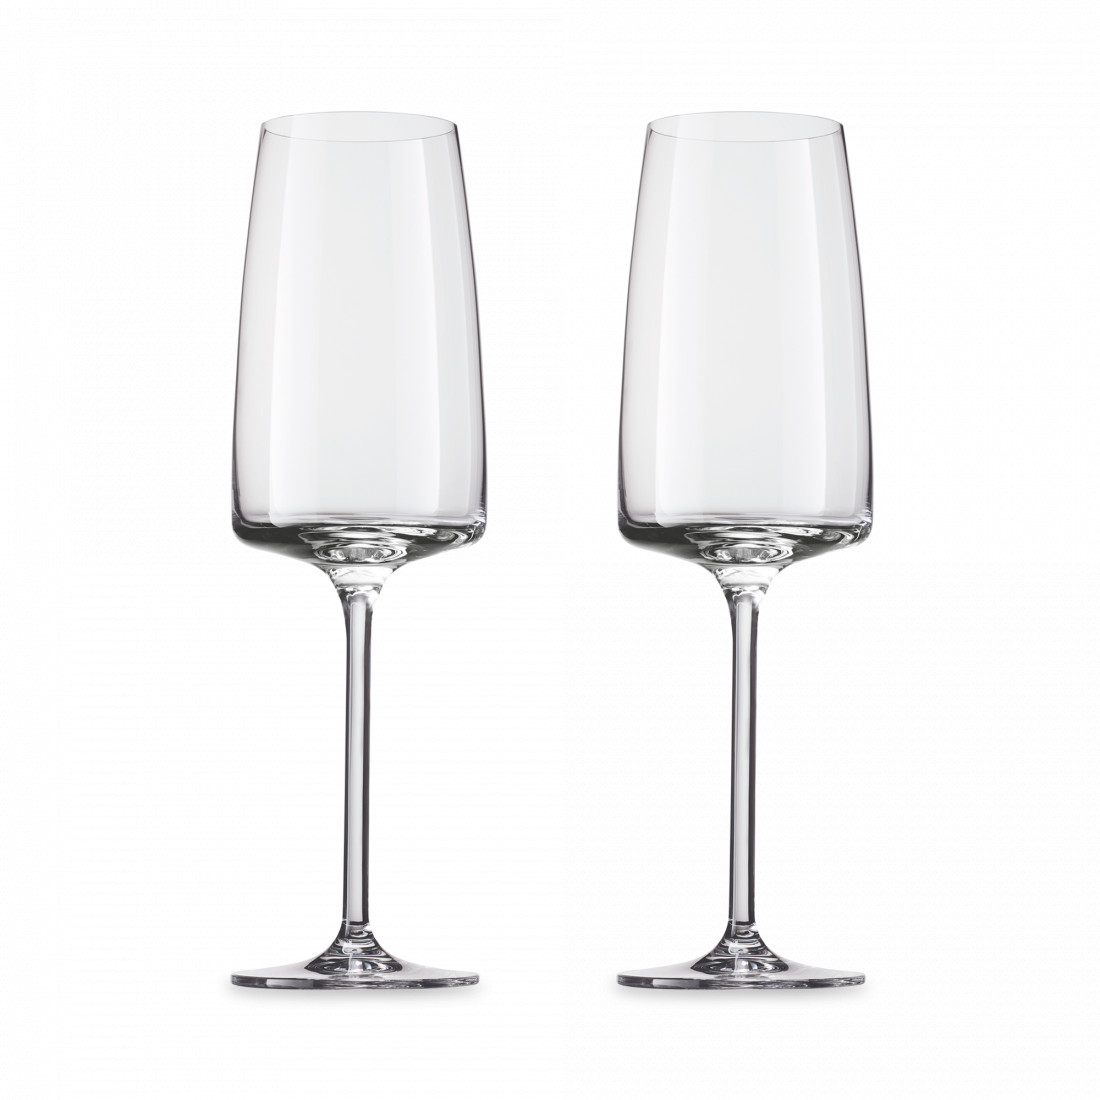 Набор бокалов 2 шт. для игристых вин, 388 мл., Vivid Senses, ZWIESEL GLAS